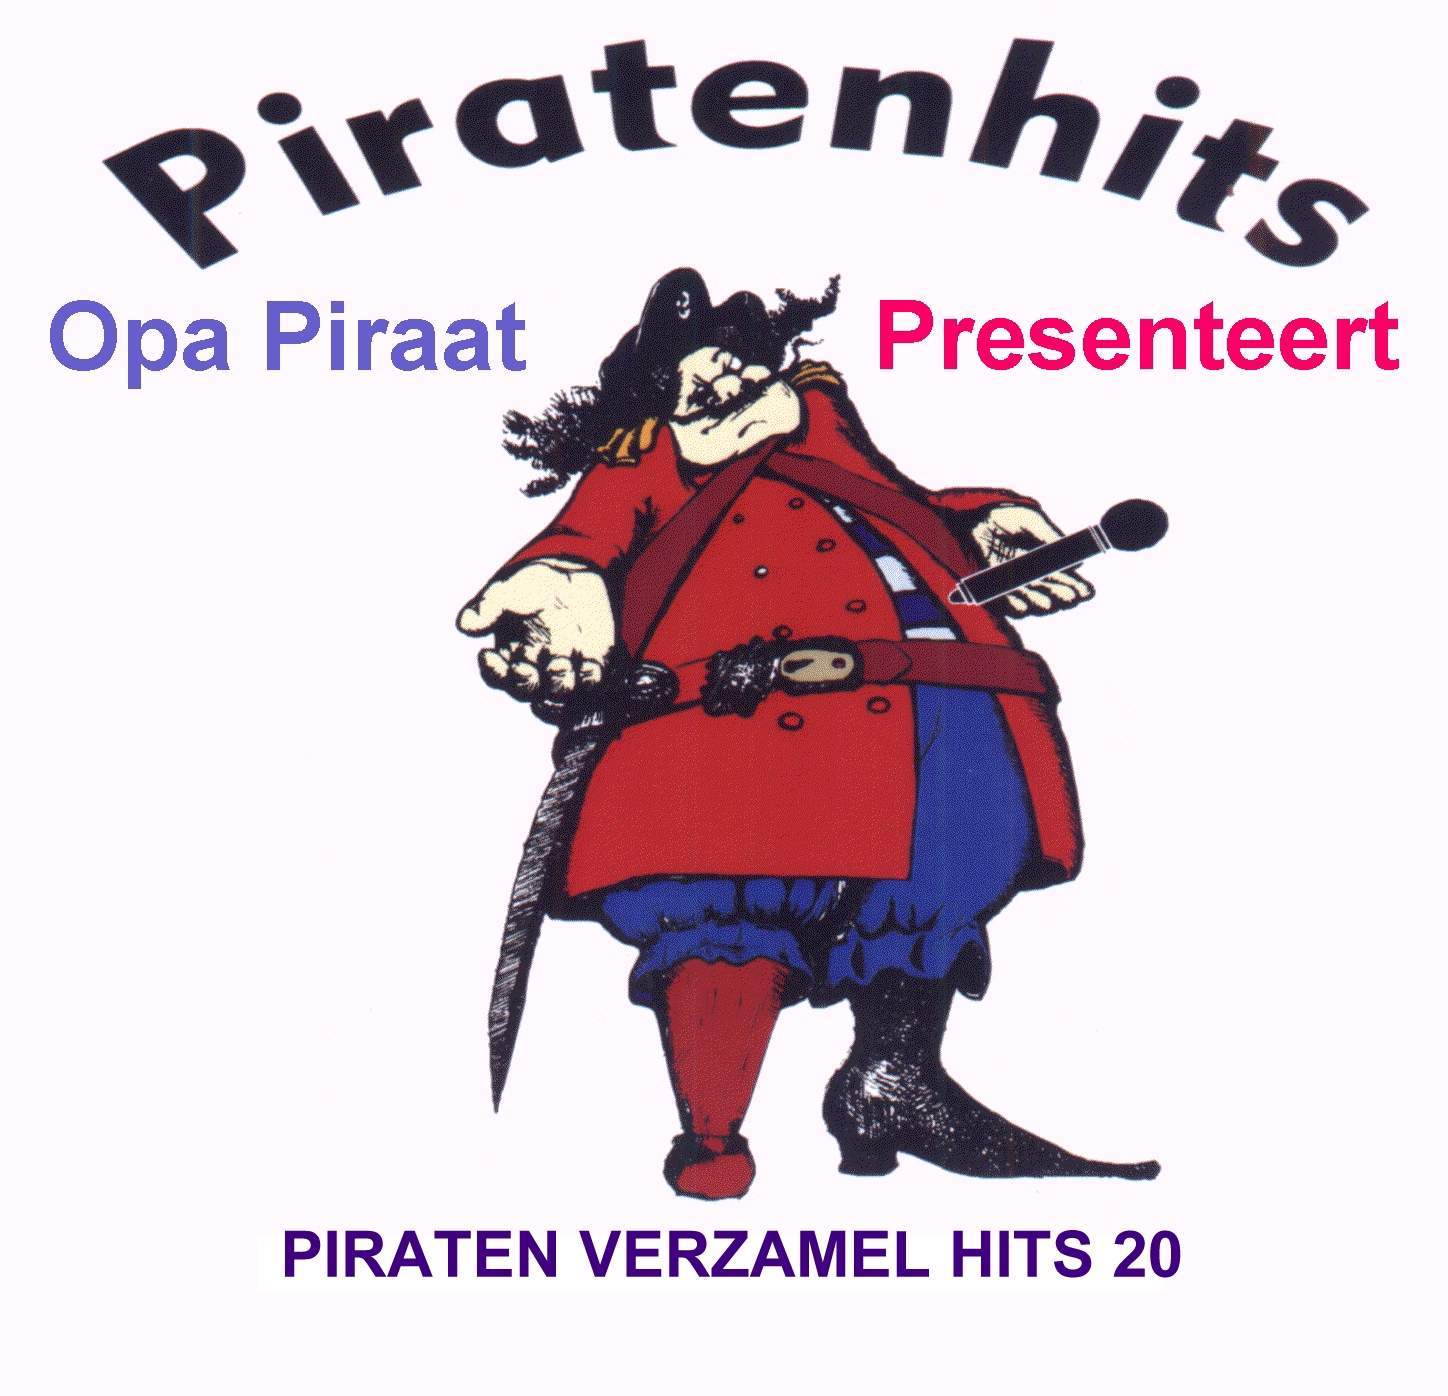 Opa Piraat - PIRATEN MIX - NR 01 TM 20